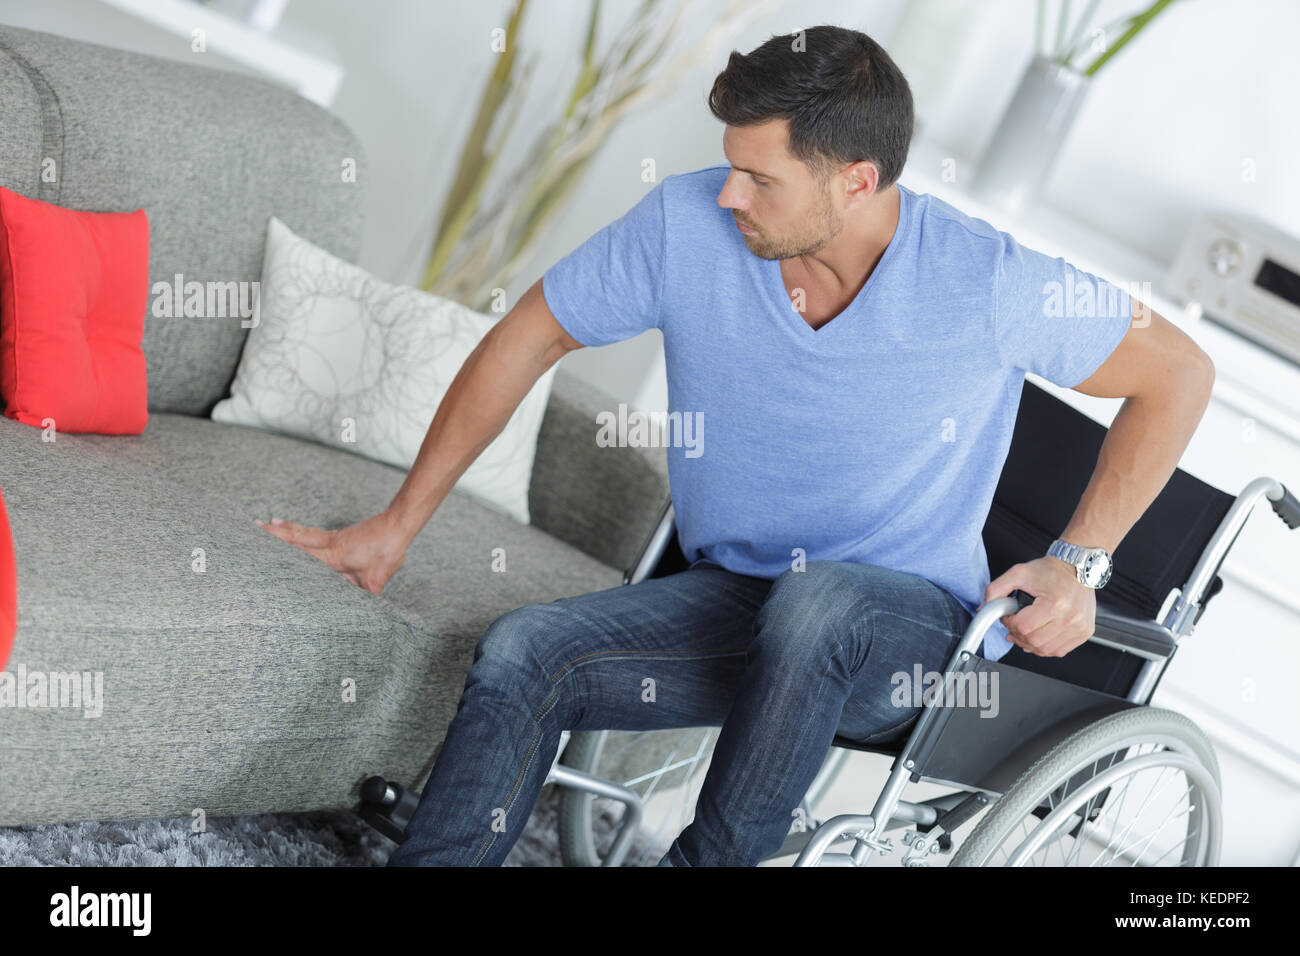 Mann im Rollstuhl sitzen Sofa alon e Stockfoto